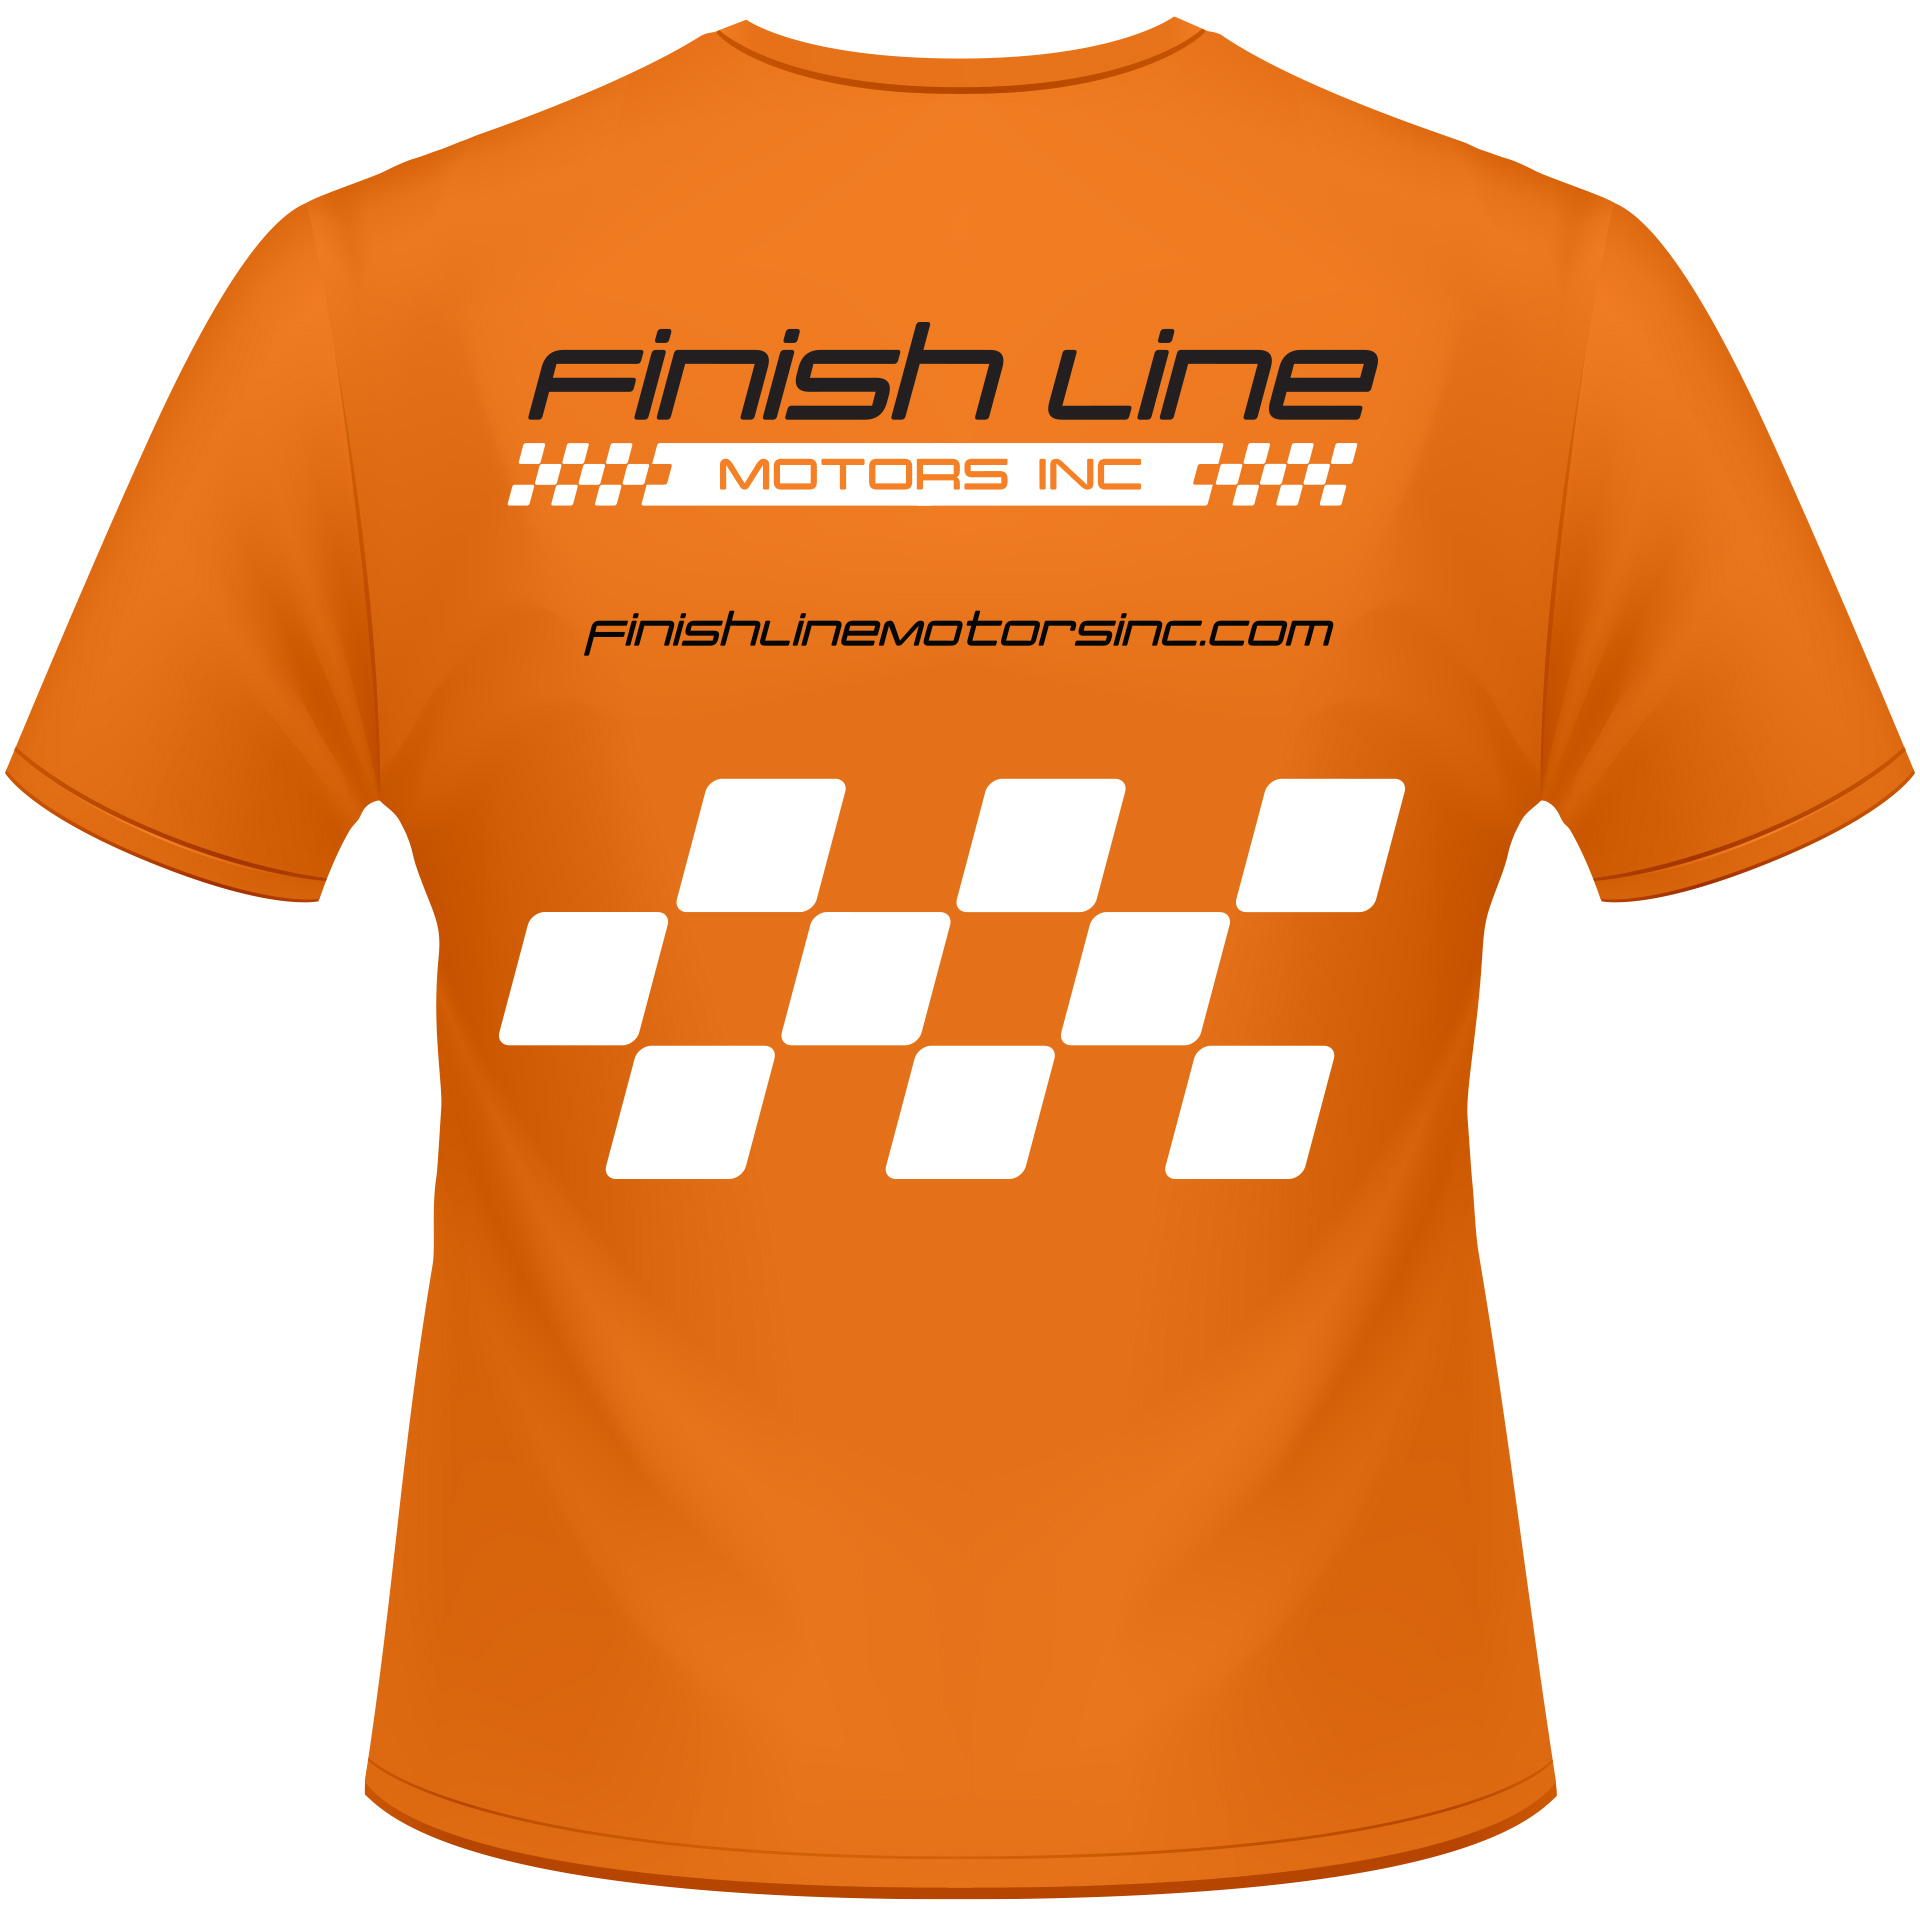 Finish Line Motors Logo